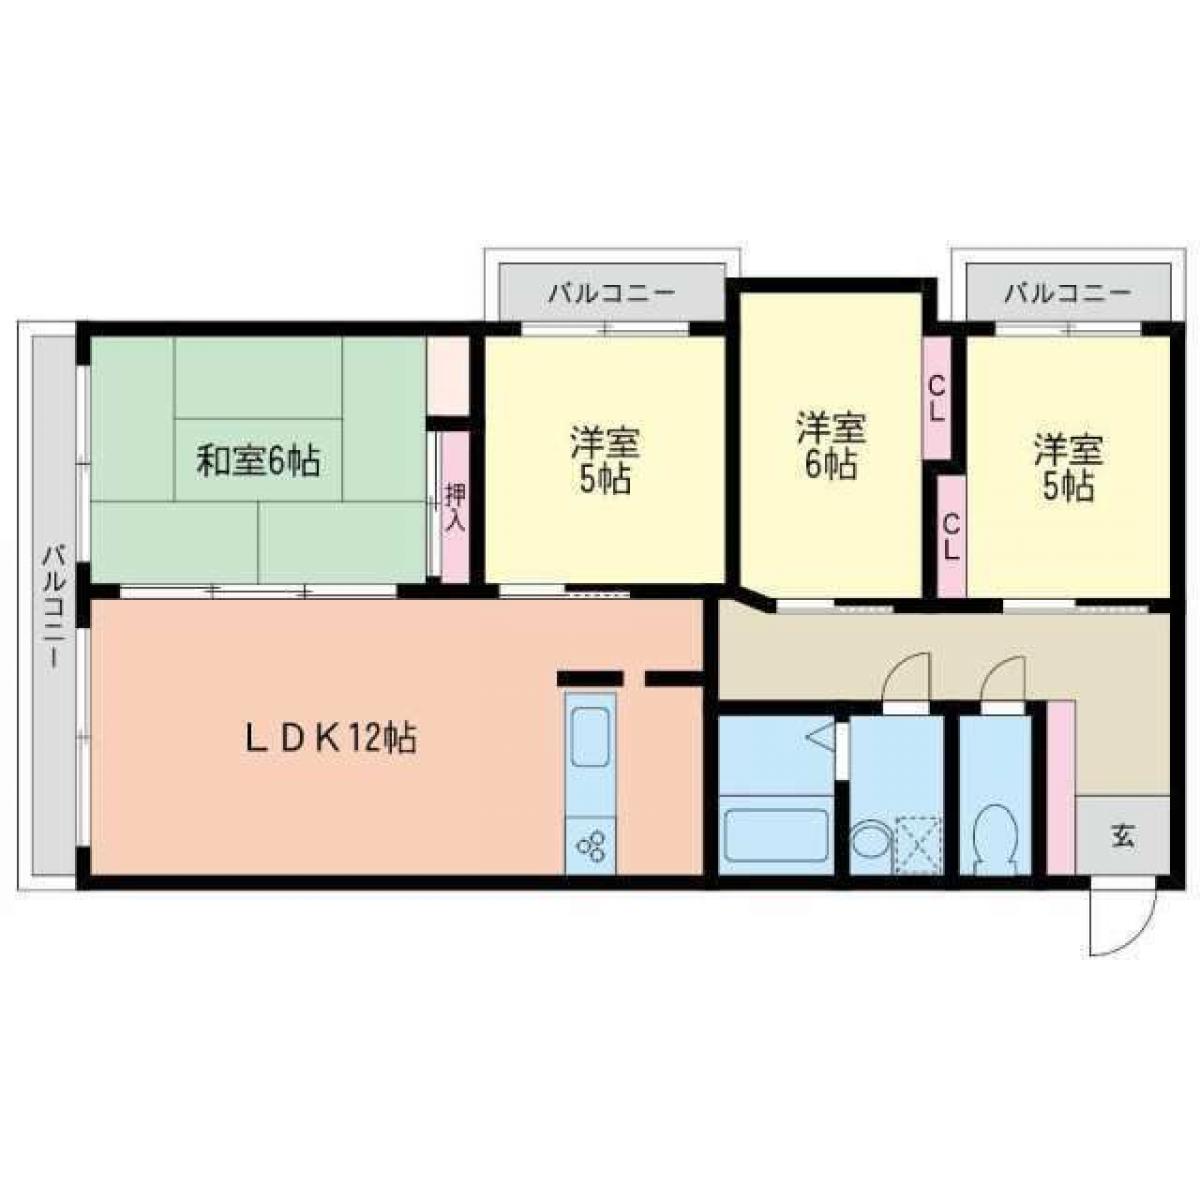 Picture of Apartment For Sale in Kitakyushu Shi Kokurakita Ku, Fukuoka, Japan